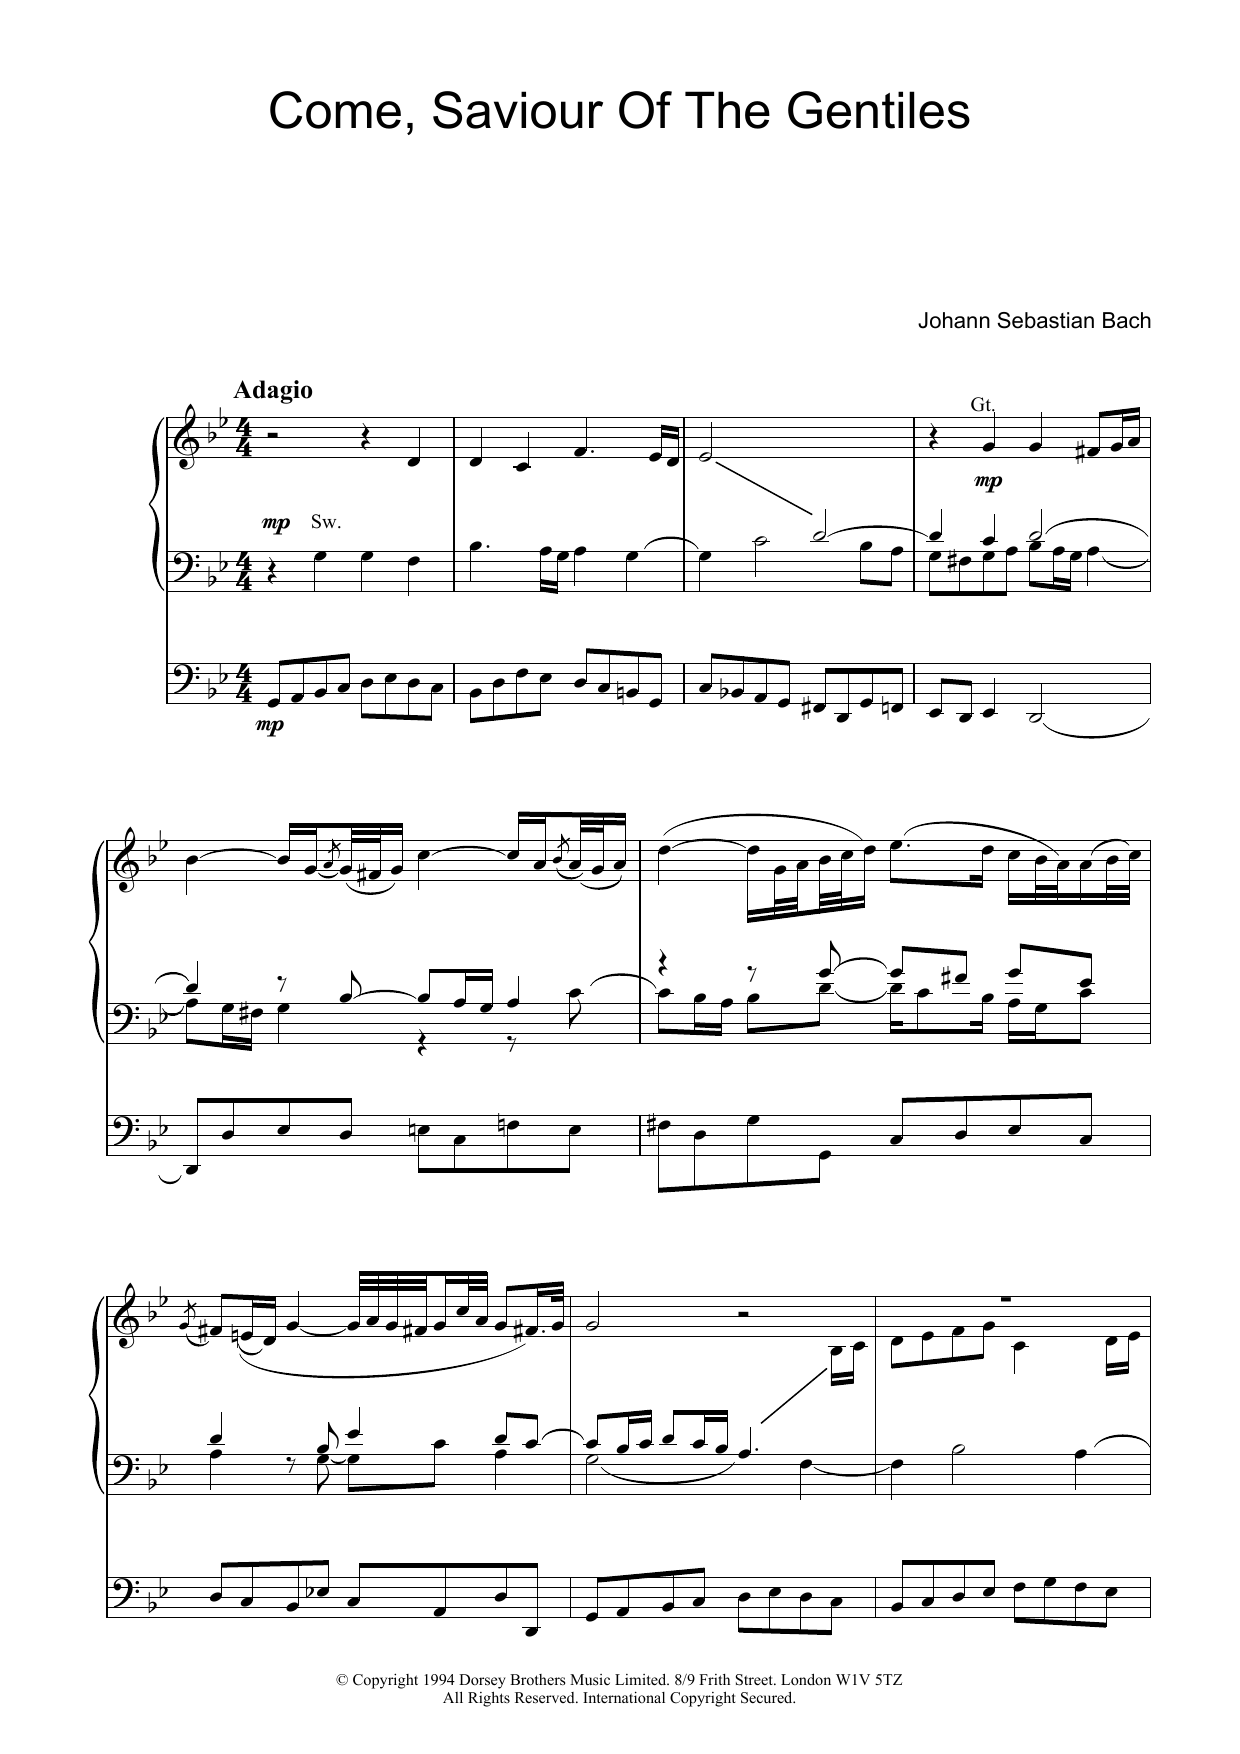 Johann Sebastian Bach Come, Saviour Of The Gentiles sheet music notes and chords. Download Printable PDF.